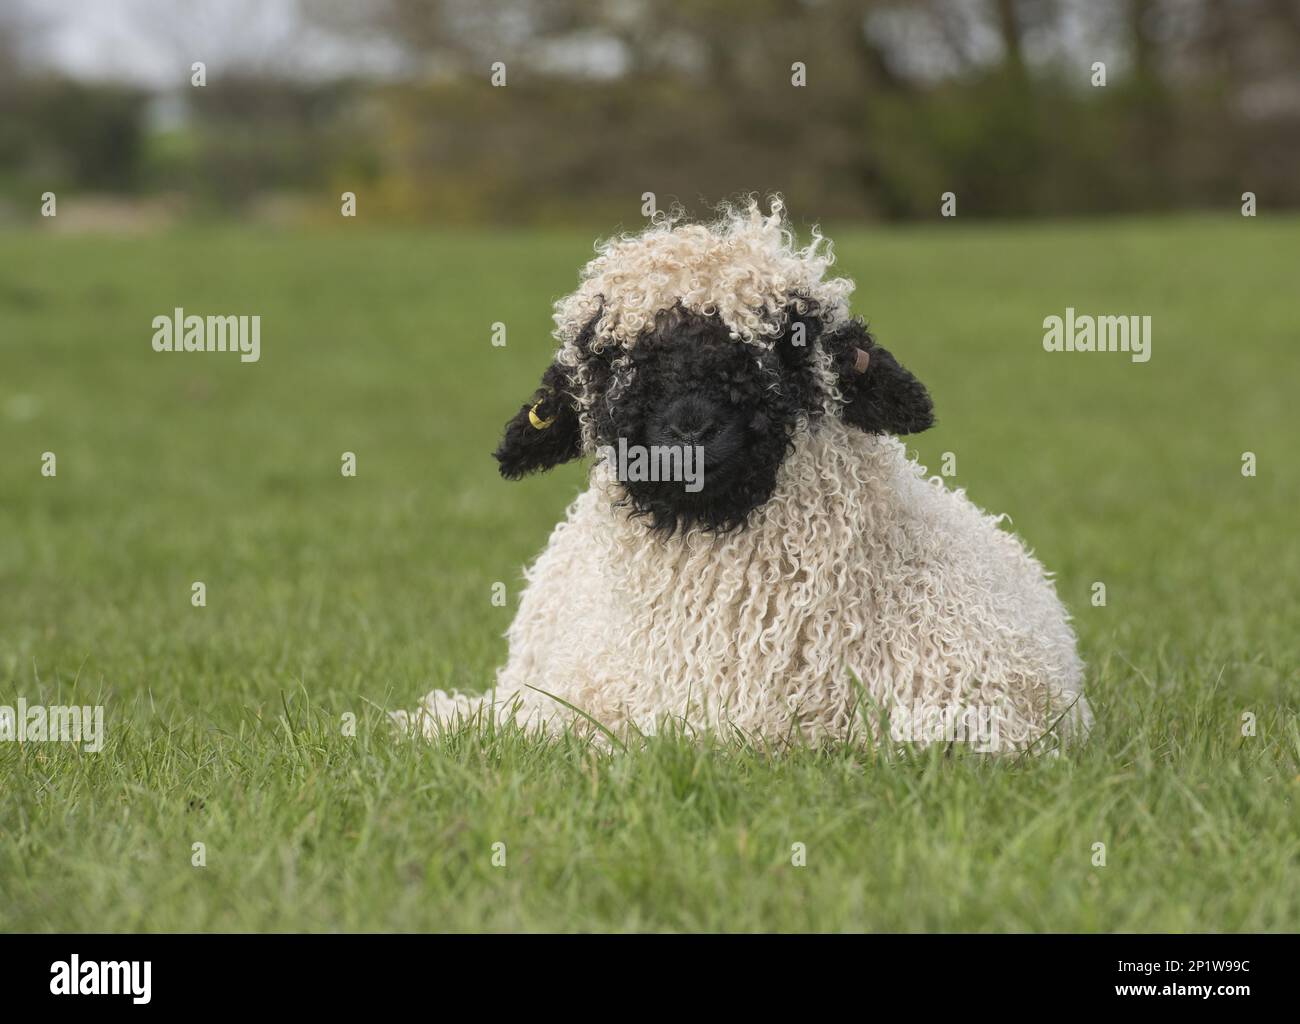 Valais Blacknose Sheep, purebred, domestic, ungulates, livestock, cloven-hoofed, mammals, animals, domestic sheep, Domestic Sheep, Blacknose Sheep Stock Photo